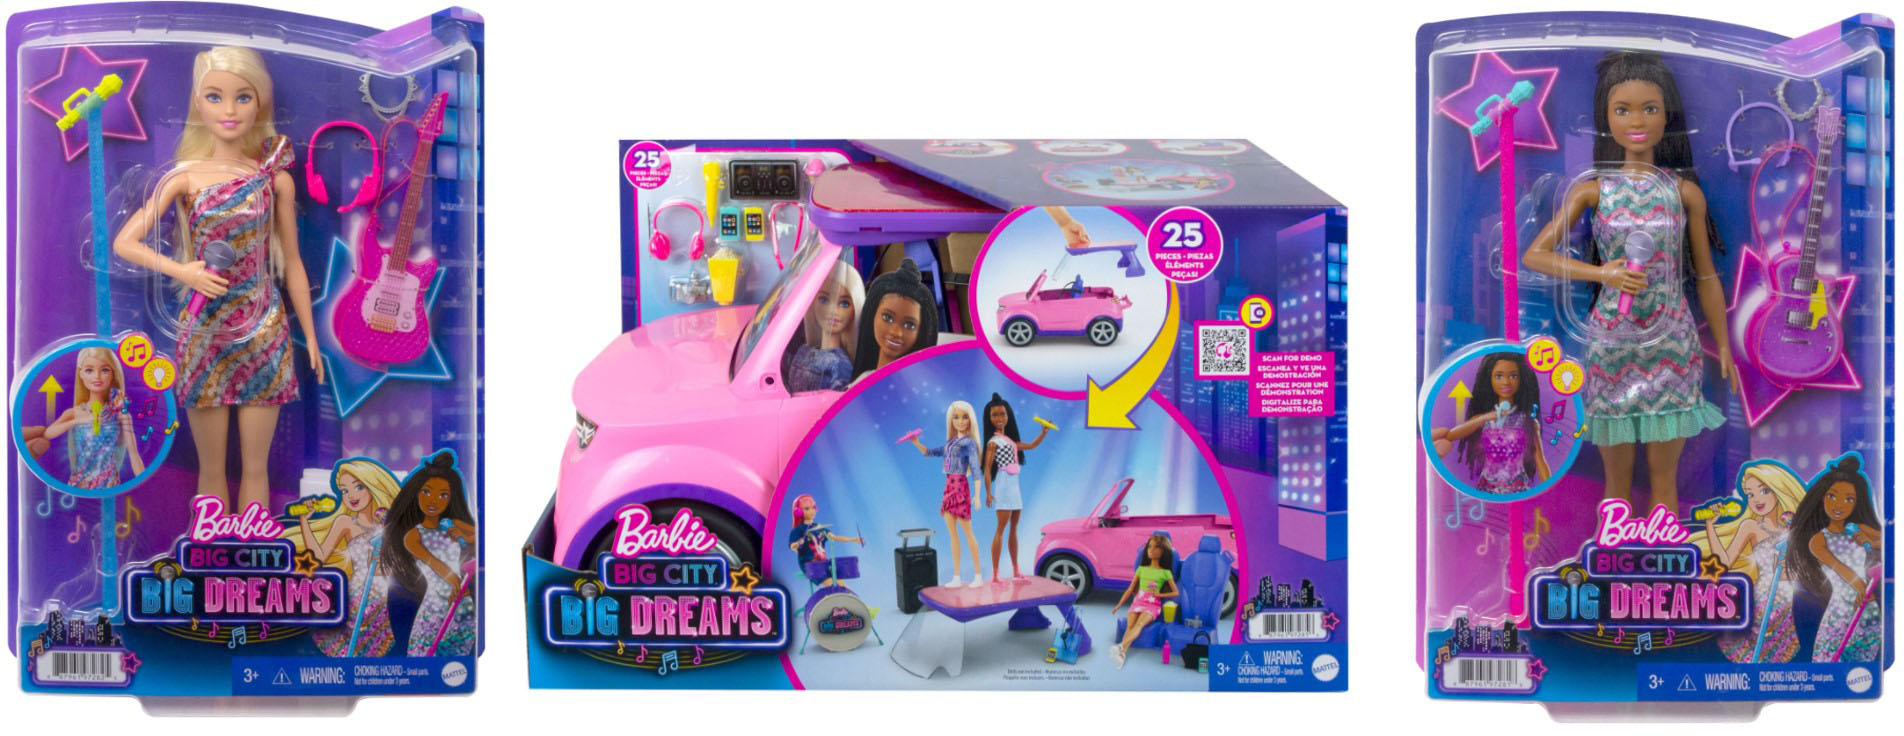 Barbie City Big Dreams Bundle HJG71 - Best